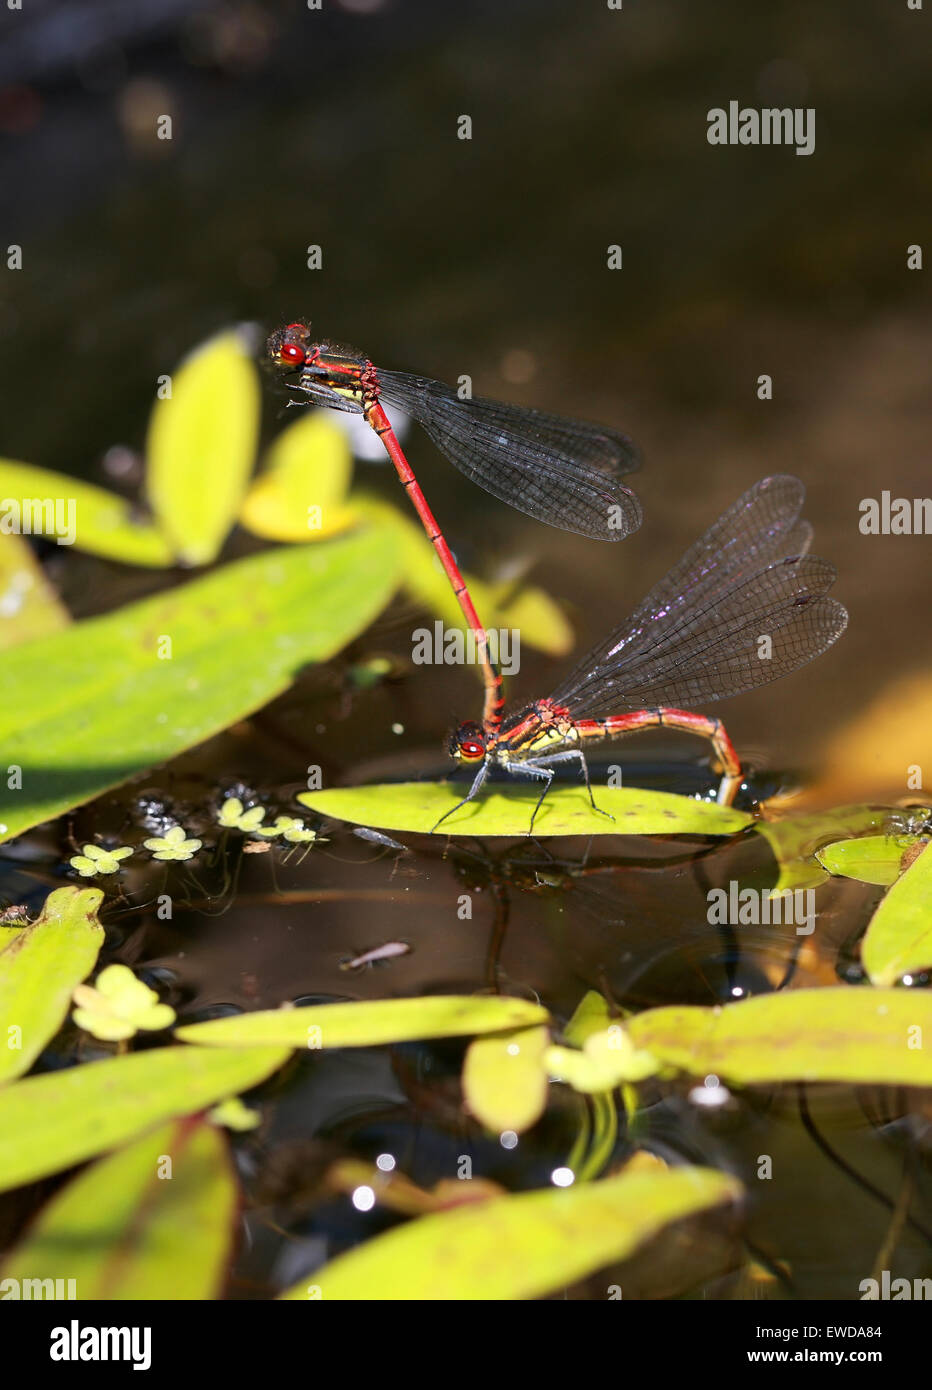 Large Red Damselflies, Pyrrhosoma nymphula, Coenagrionidae, Zygoptera, Odonata. Male and Female Pair, Laying Eggs. Stock Photo